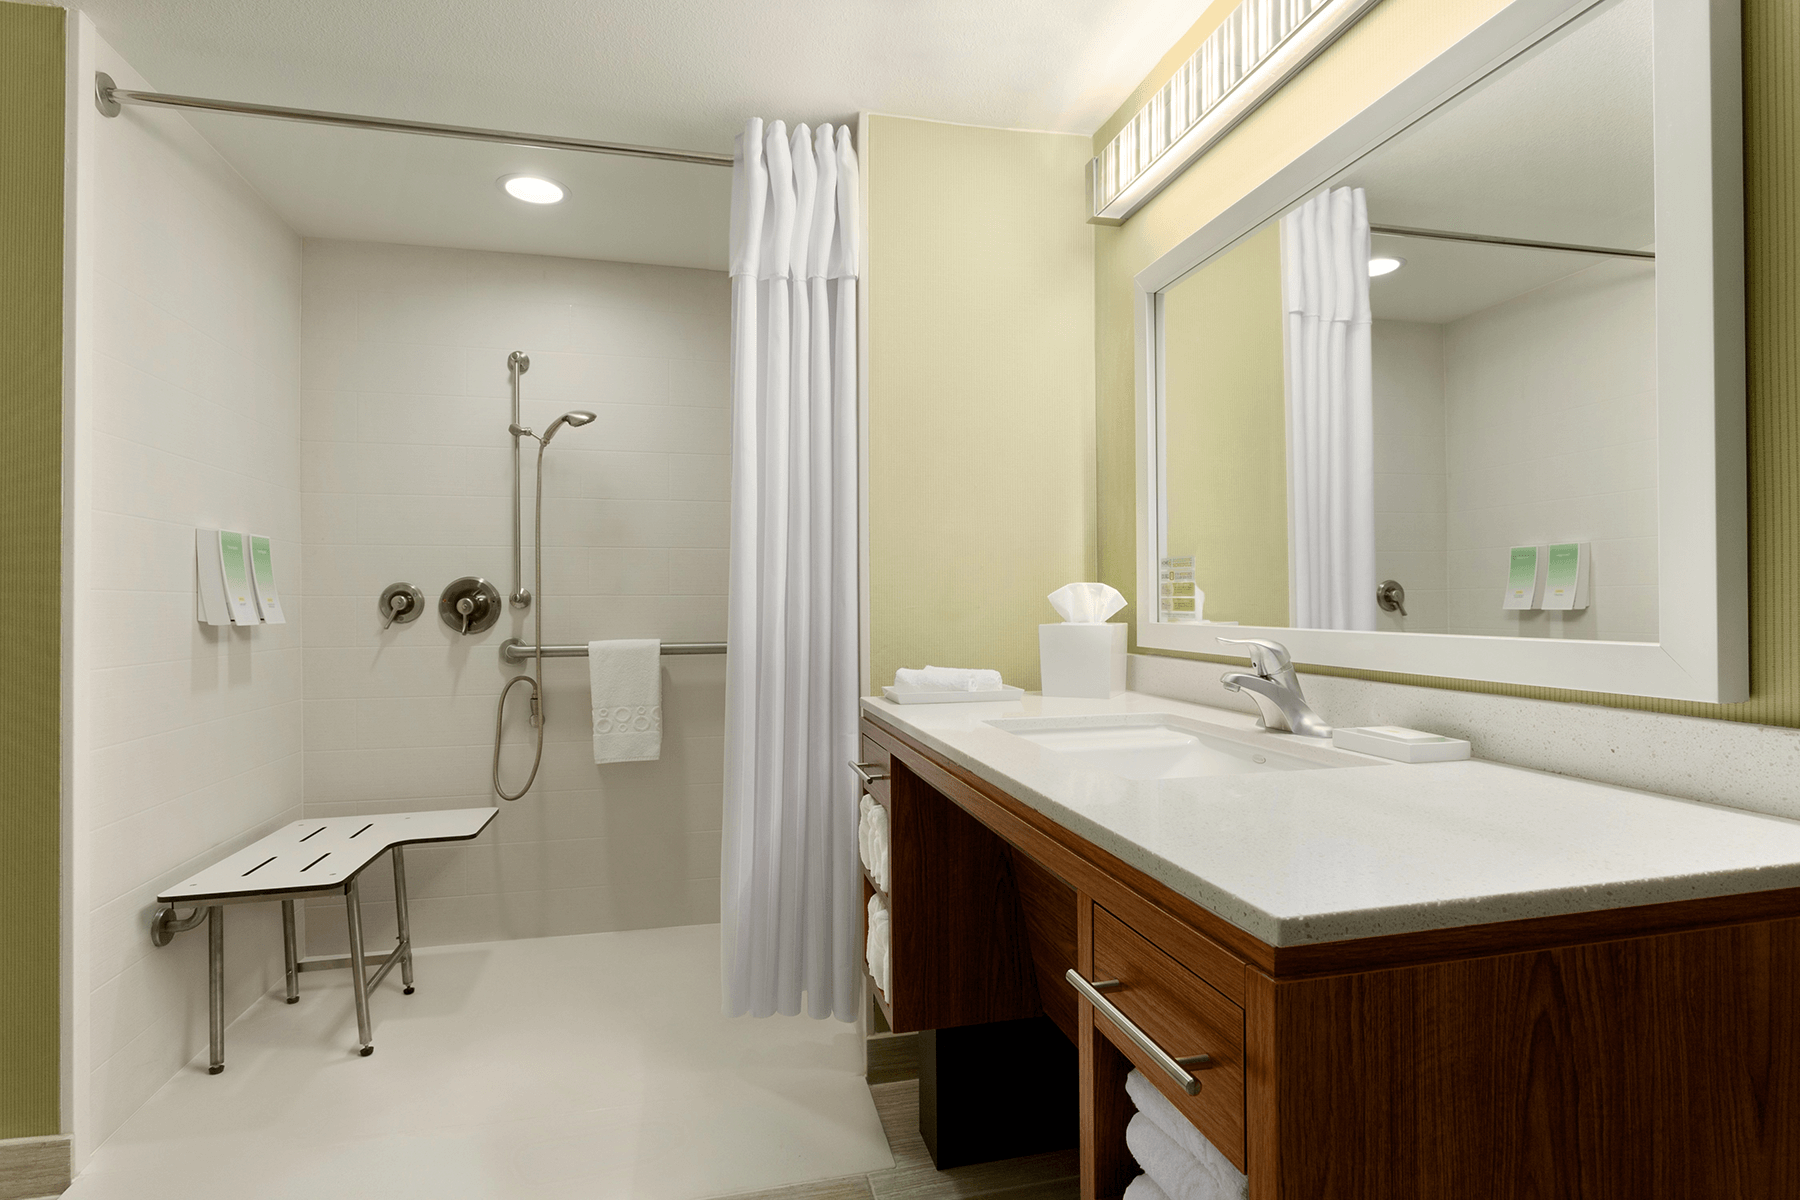  Home 2 Suites Accessible Roll-In Bathroom interior 